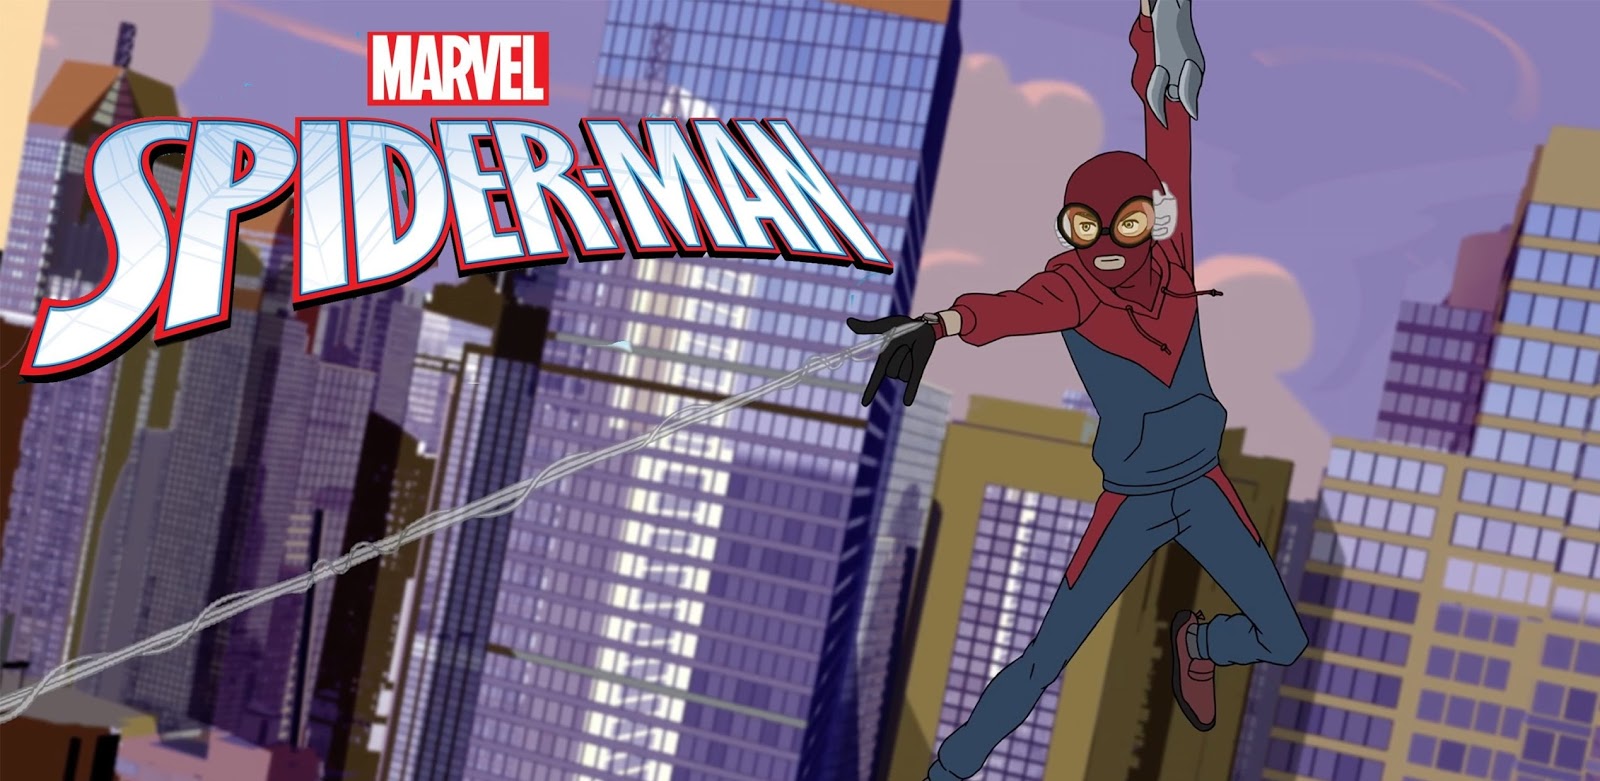 Marvel's Spiderman (2017) Tamil Dubbed Episodes Download/Watch Online -  TAMILPOINT 4U